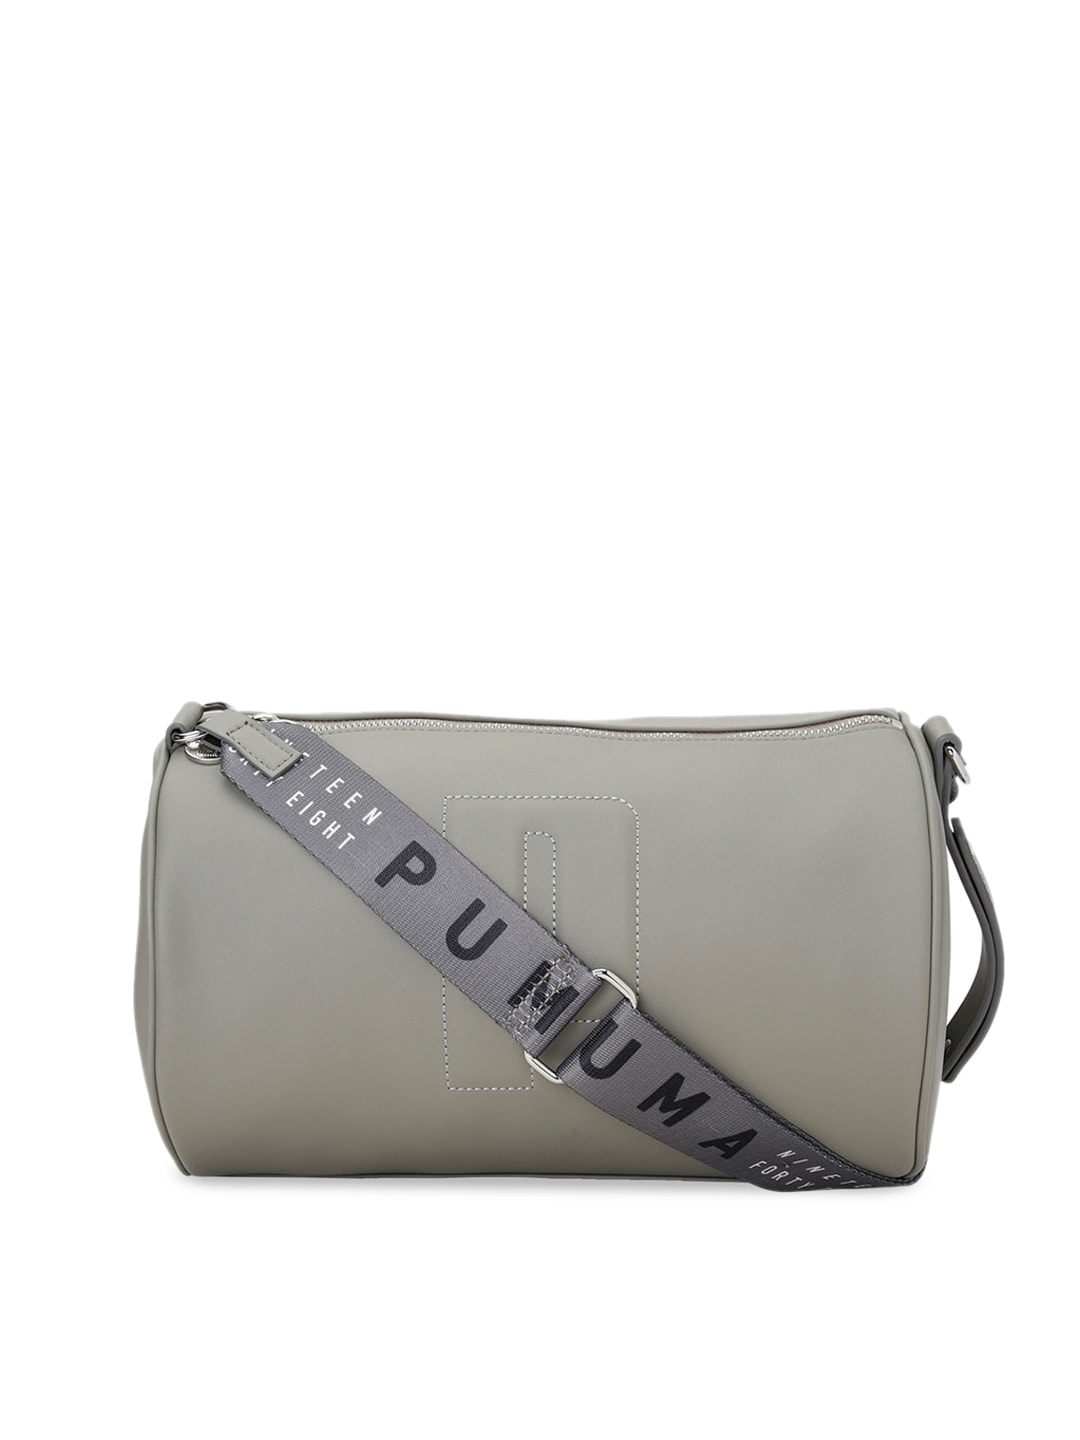 Puma Woman Grey Sling Bag Price in India